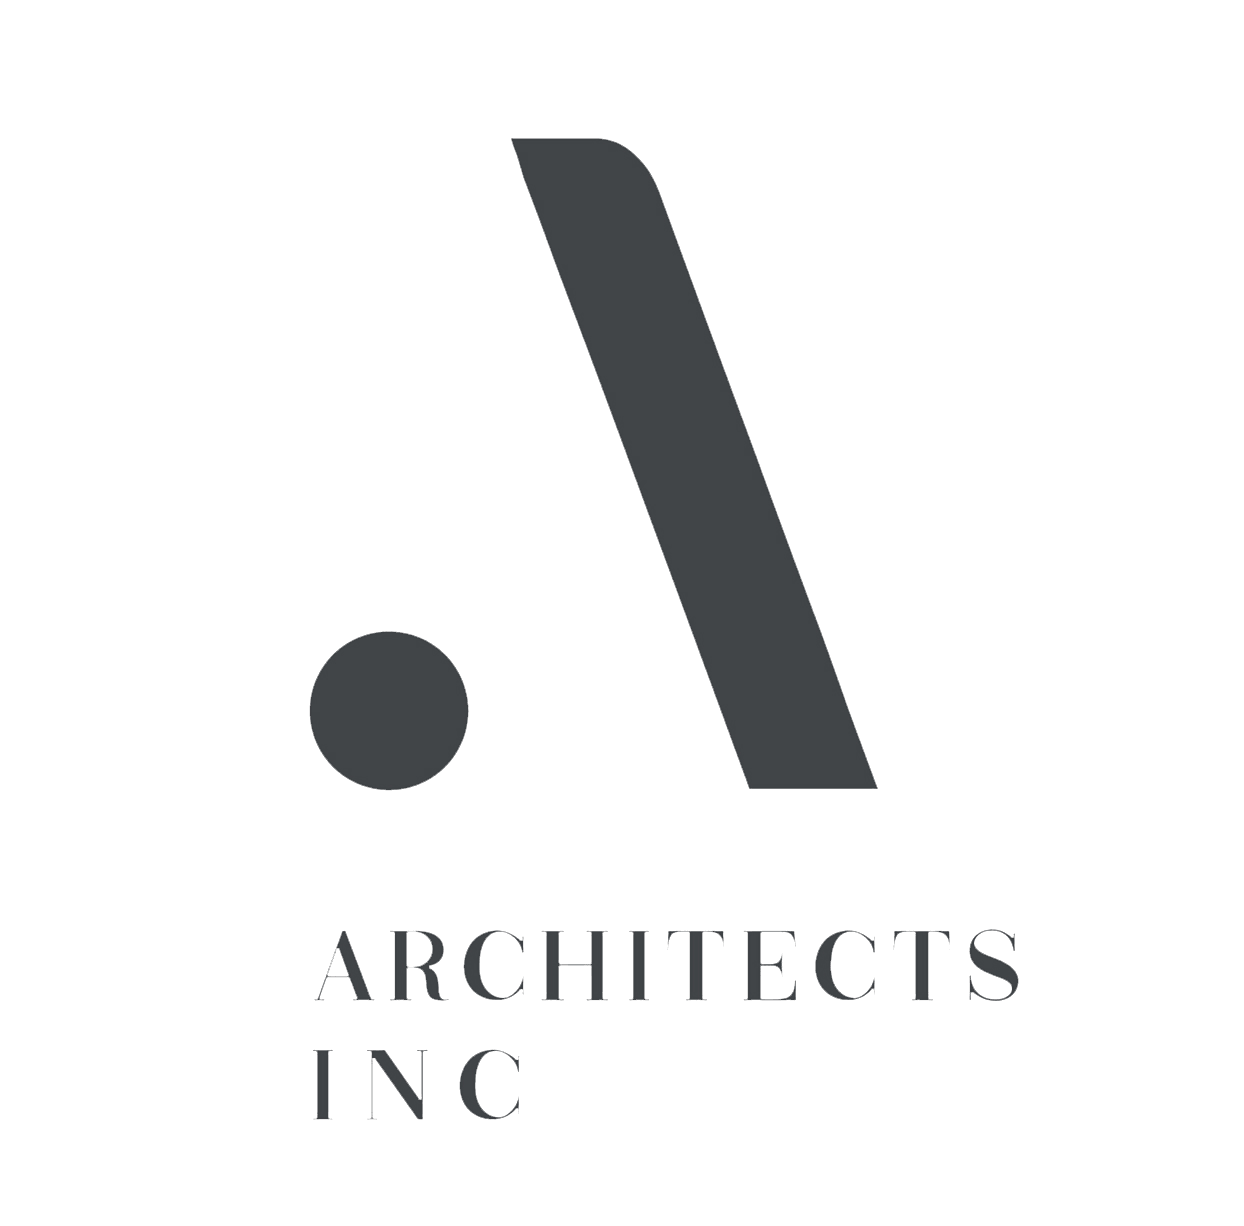 Architects INC